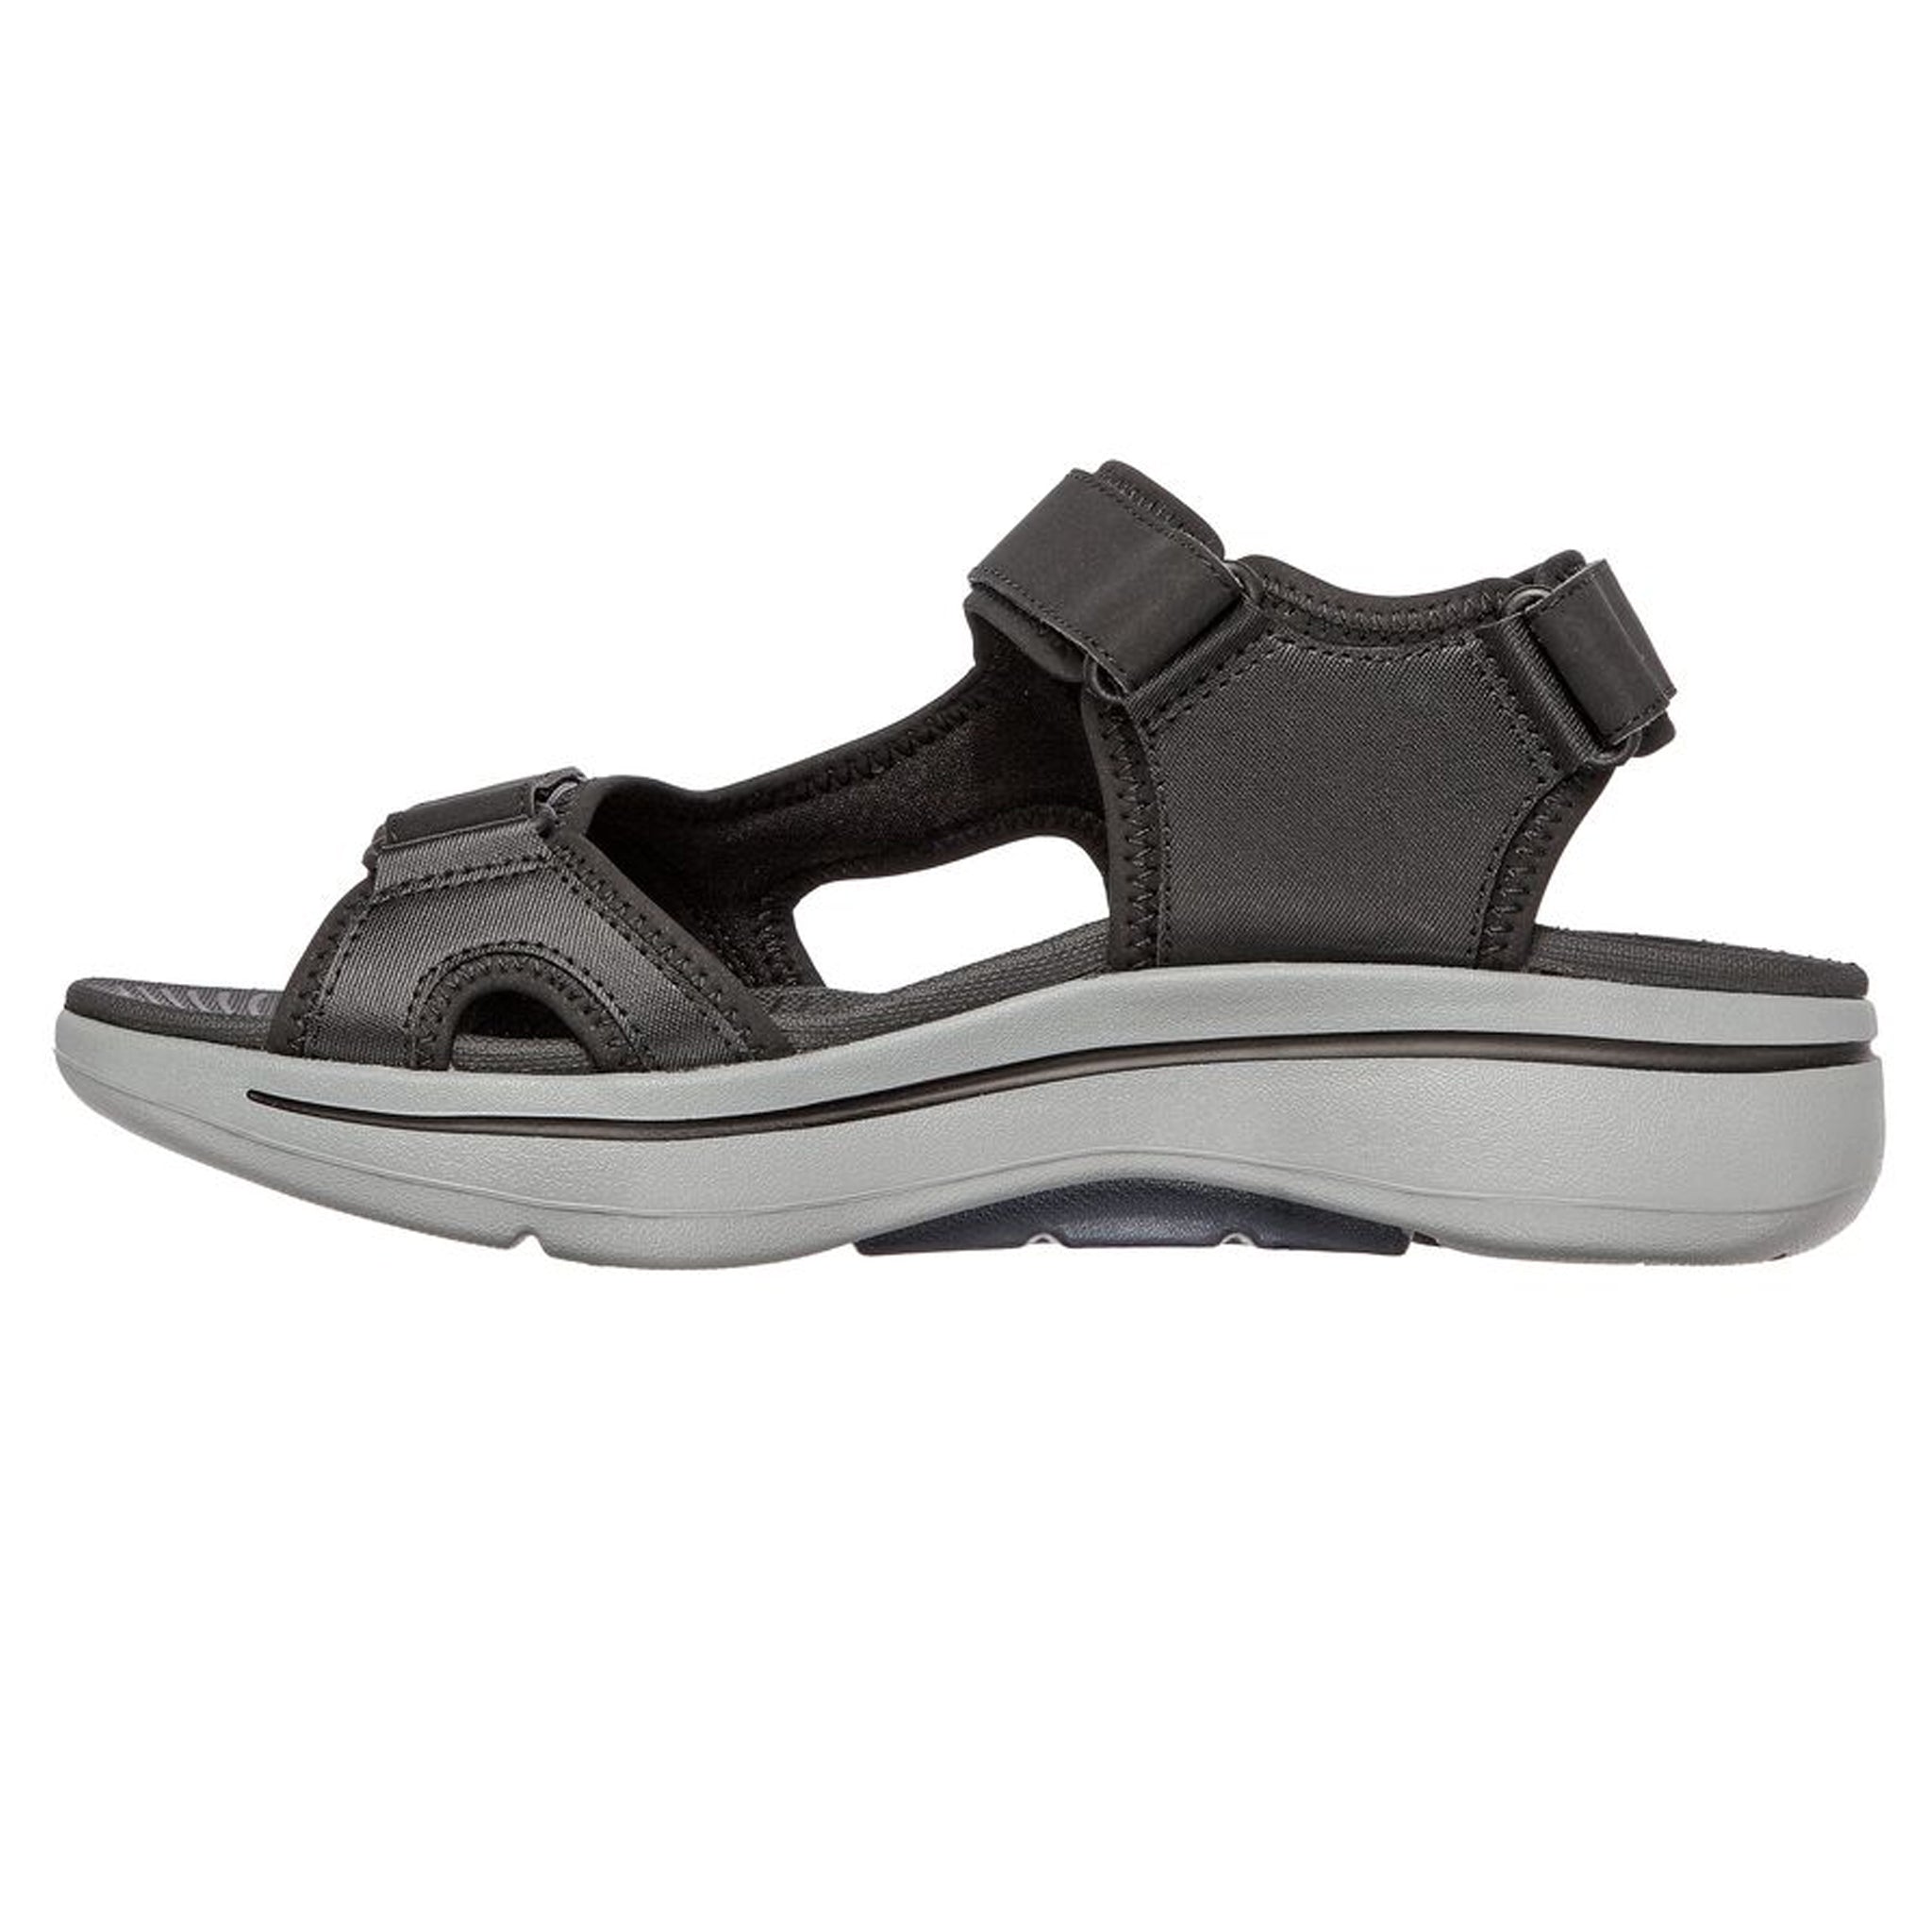 Skechers Men's 229021 Go Walk Arch Fit Sandal Mission Strap Sandals That Shoe Store and More